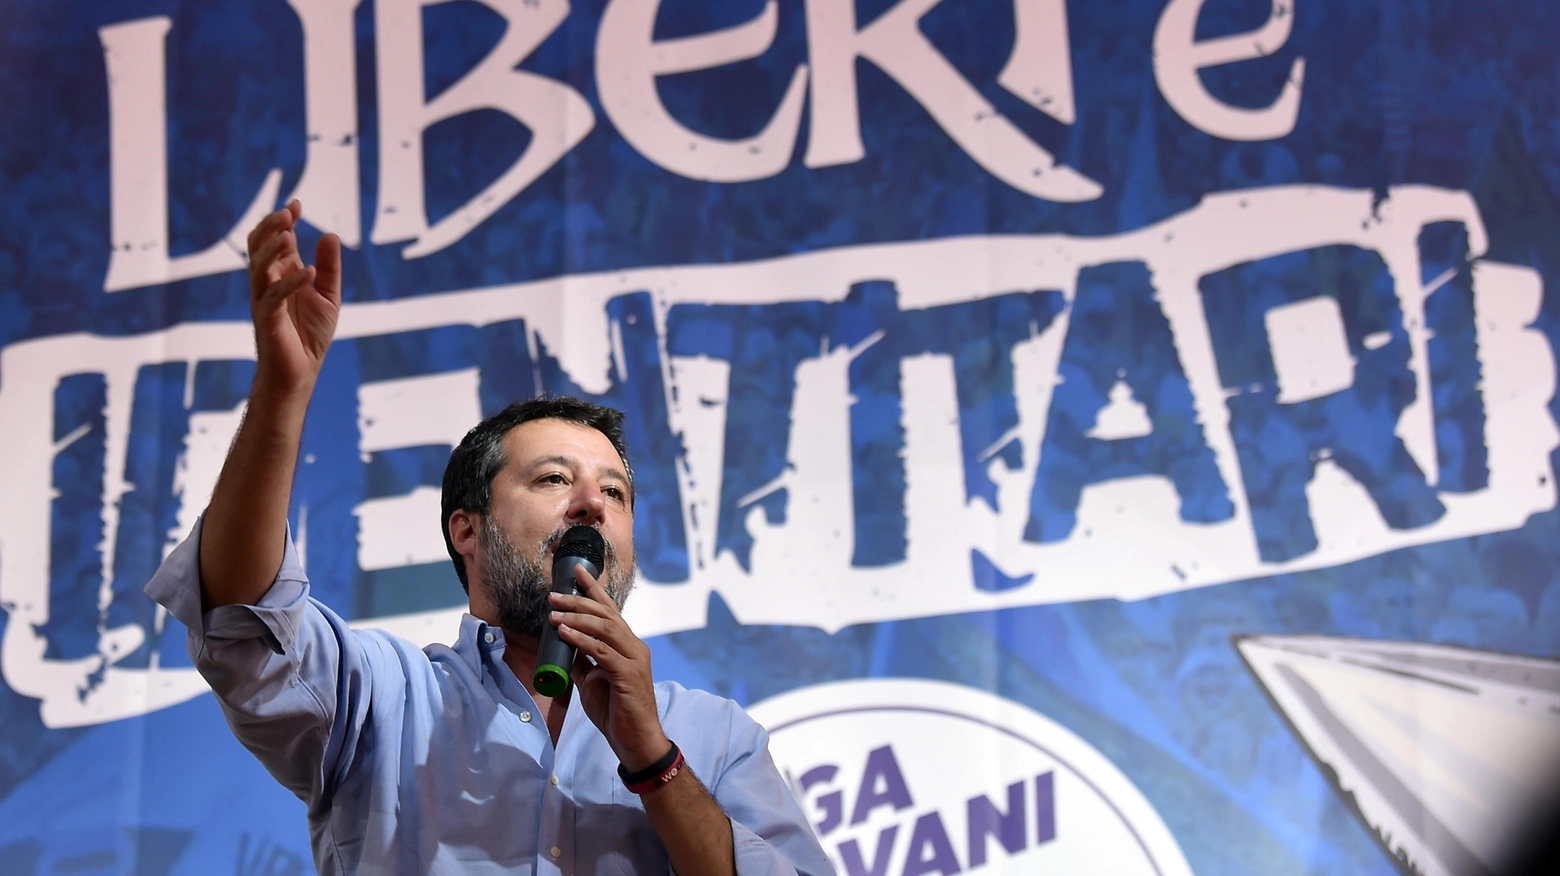 Salvini sul palco di Pontida